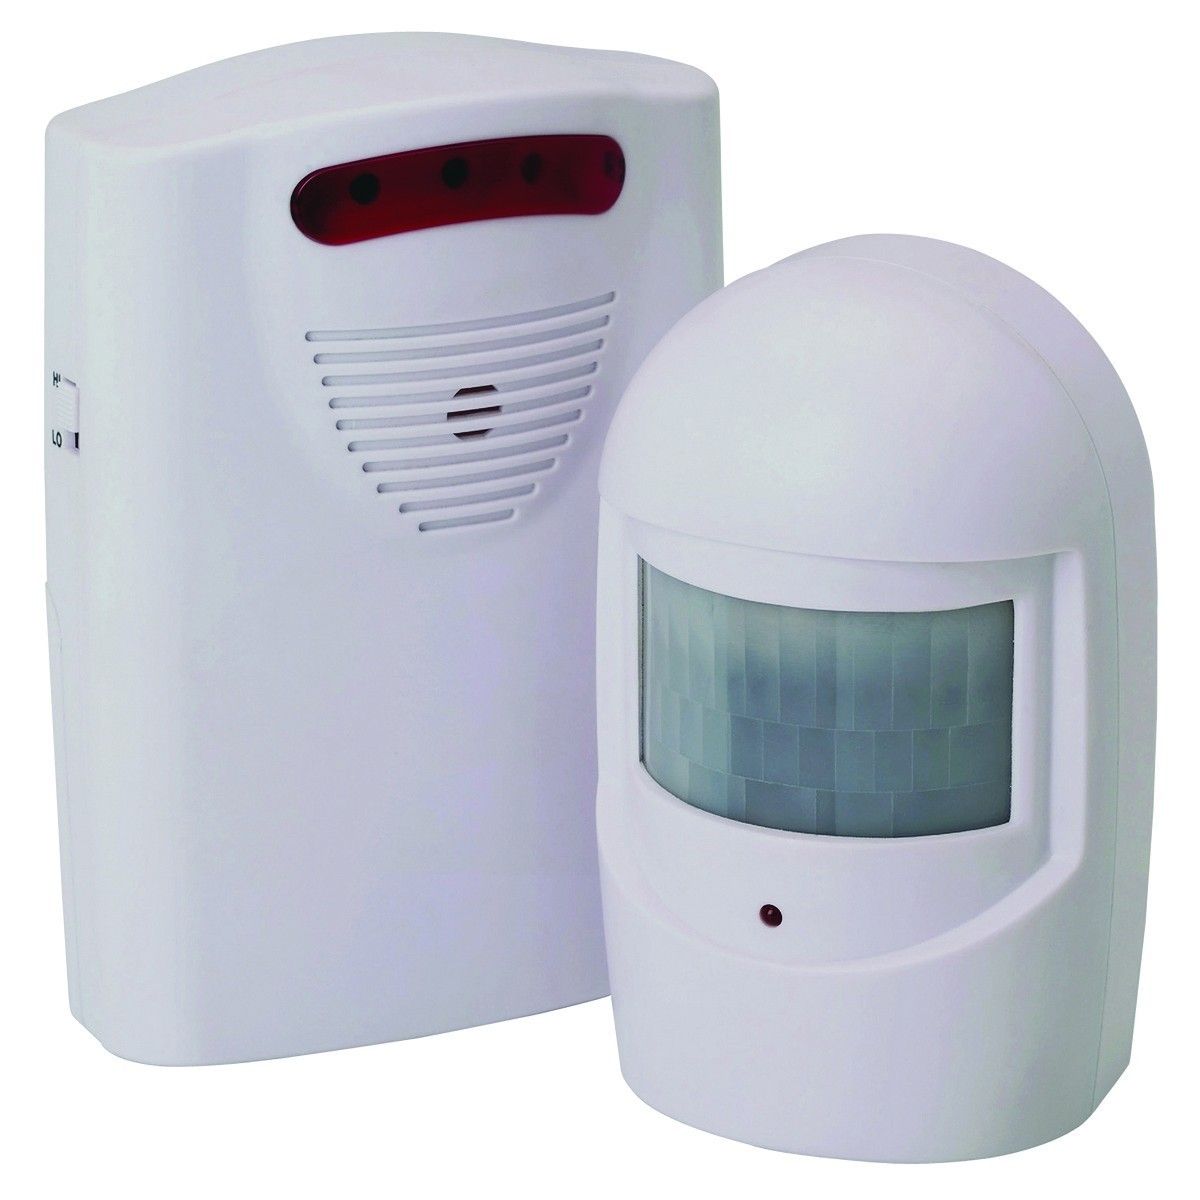  Motion Detector Sensor Alarm Home Safety Security Cordless